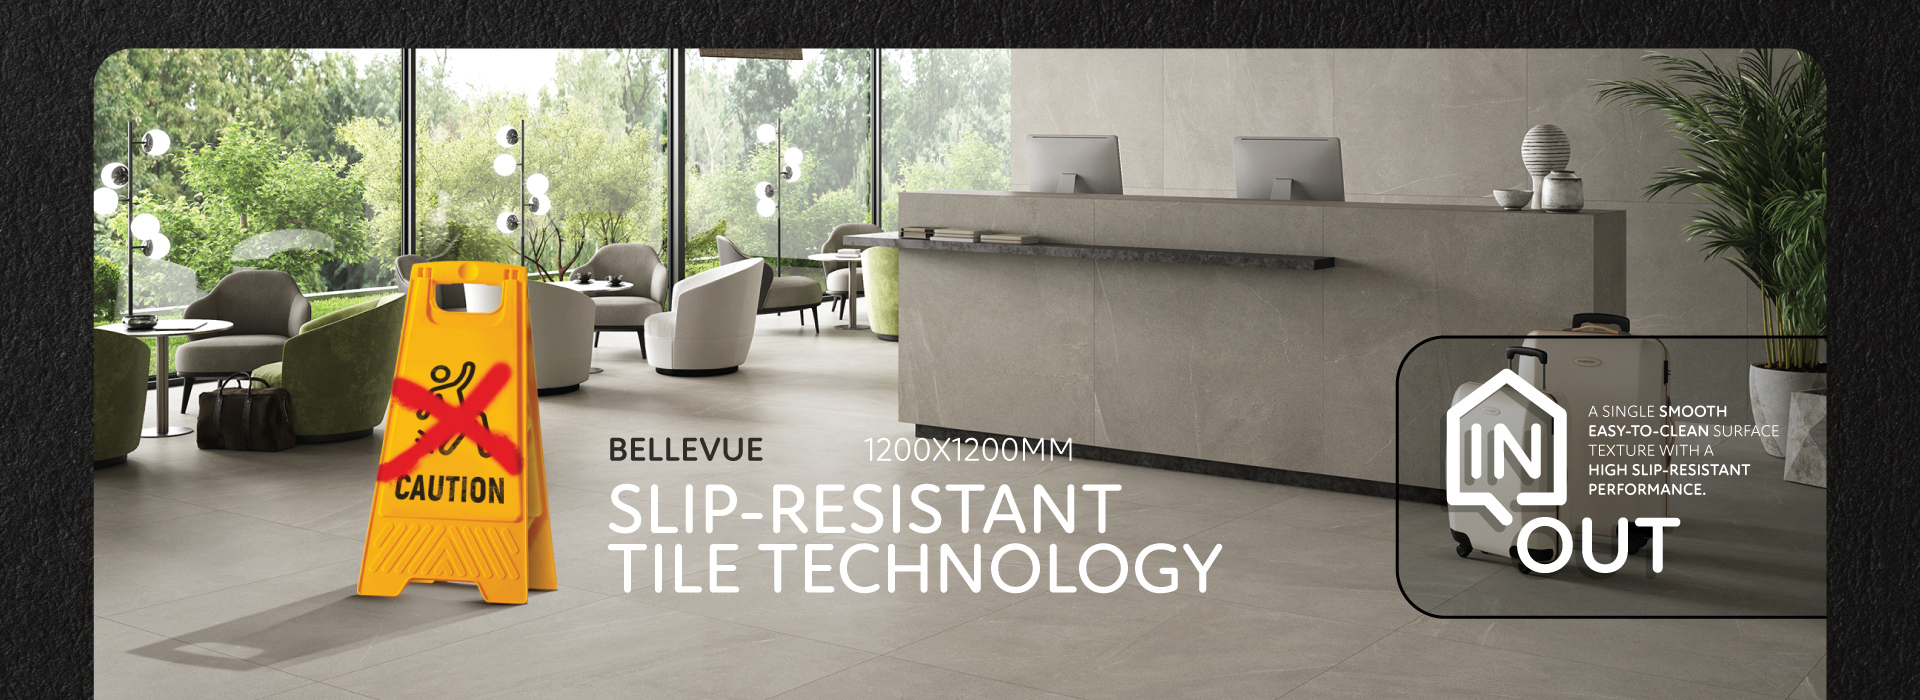 Bellevue Tile Collection